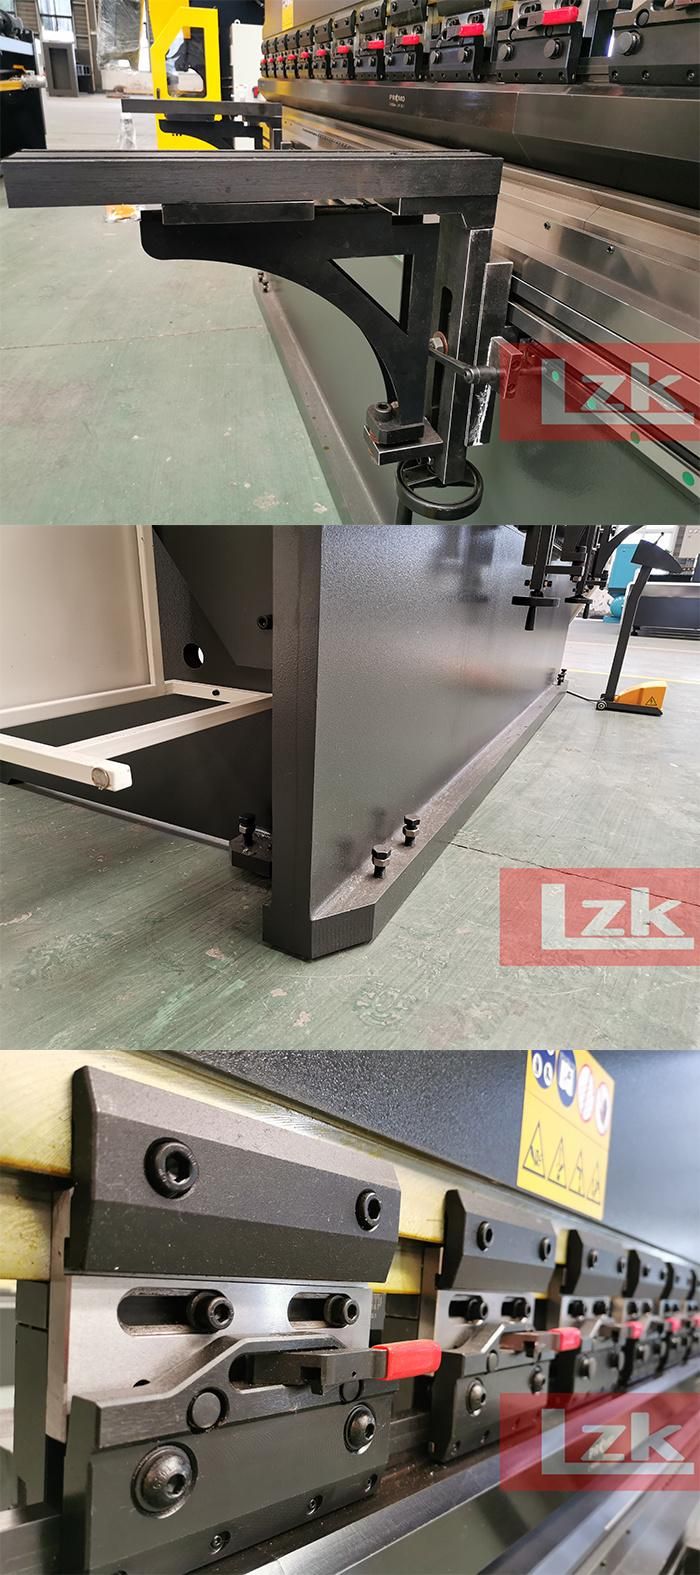 100tonx3200mm Inox Sheet Plate Bending Machine